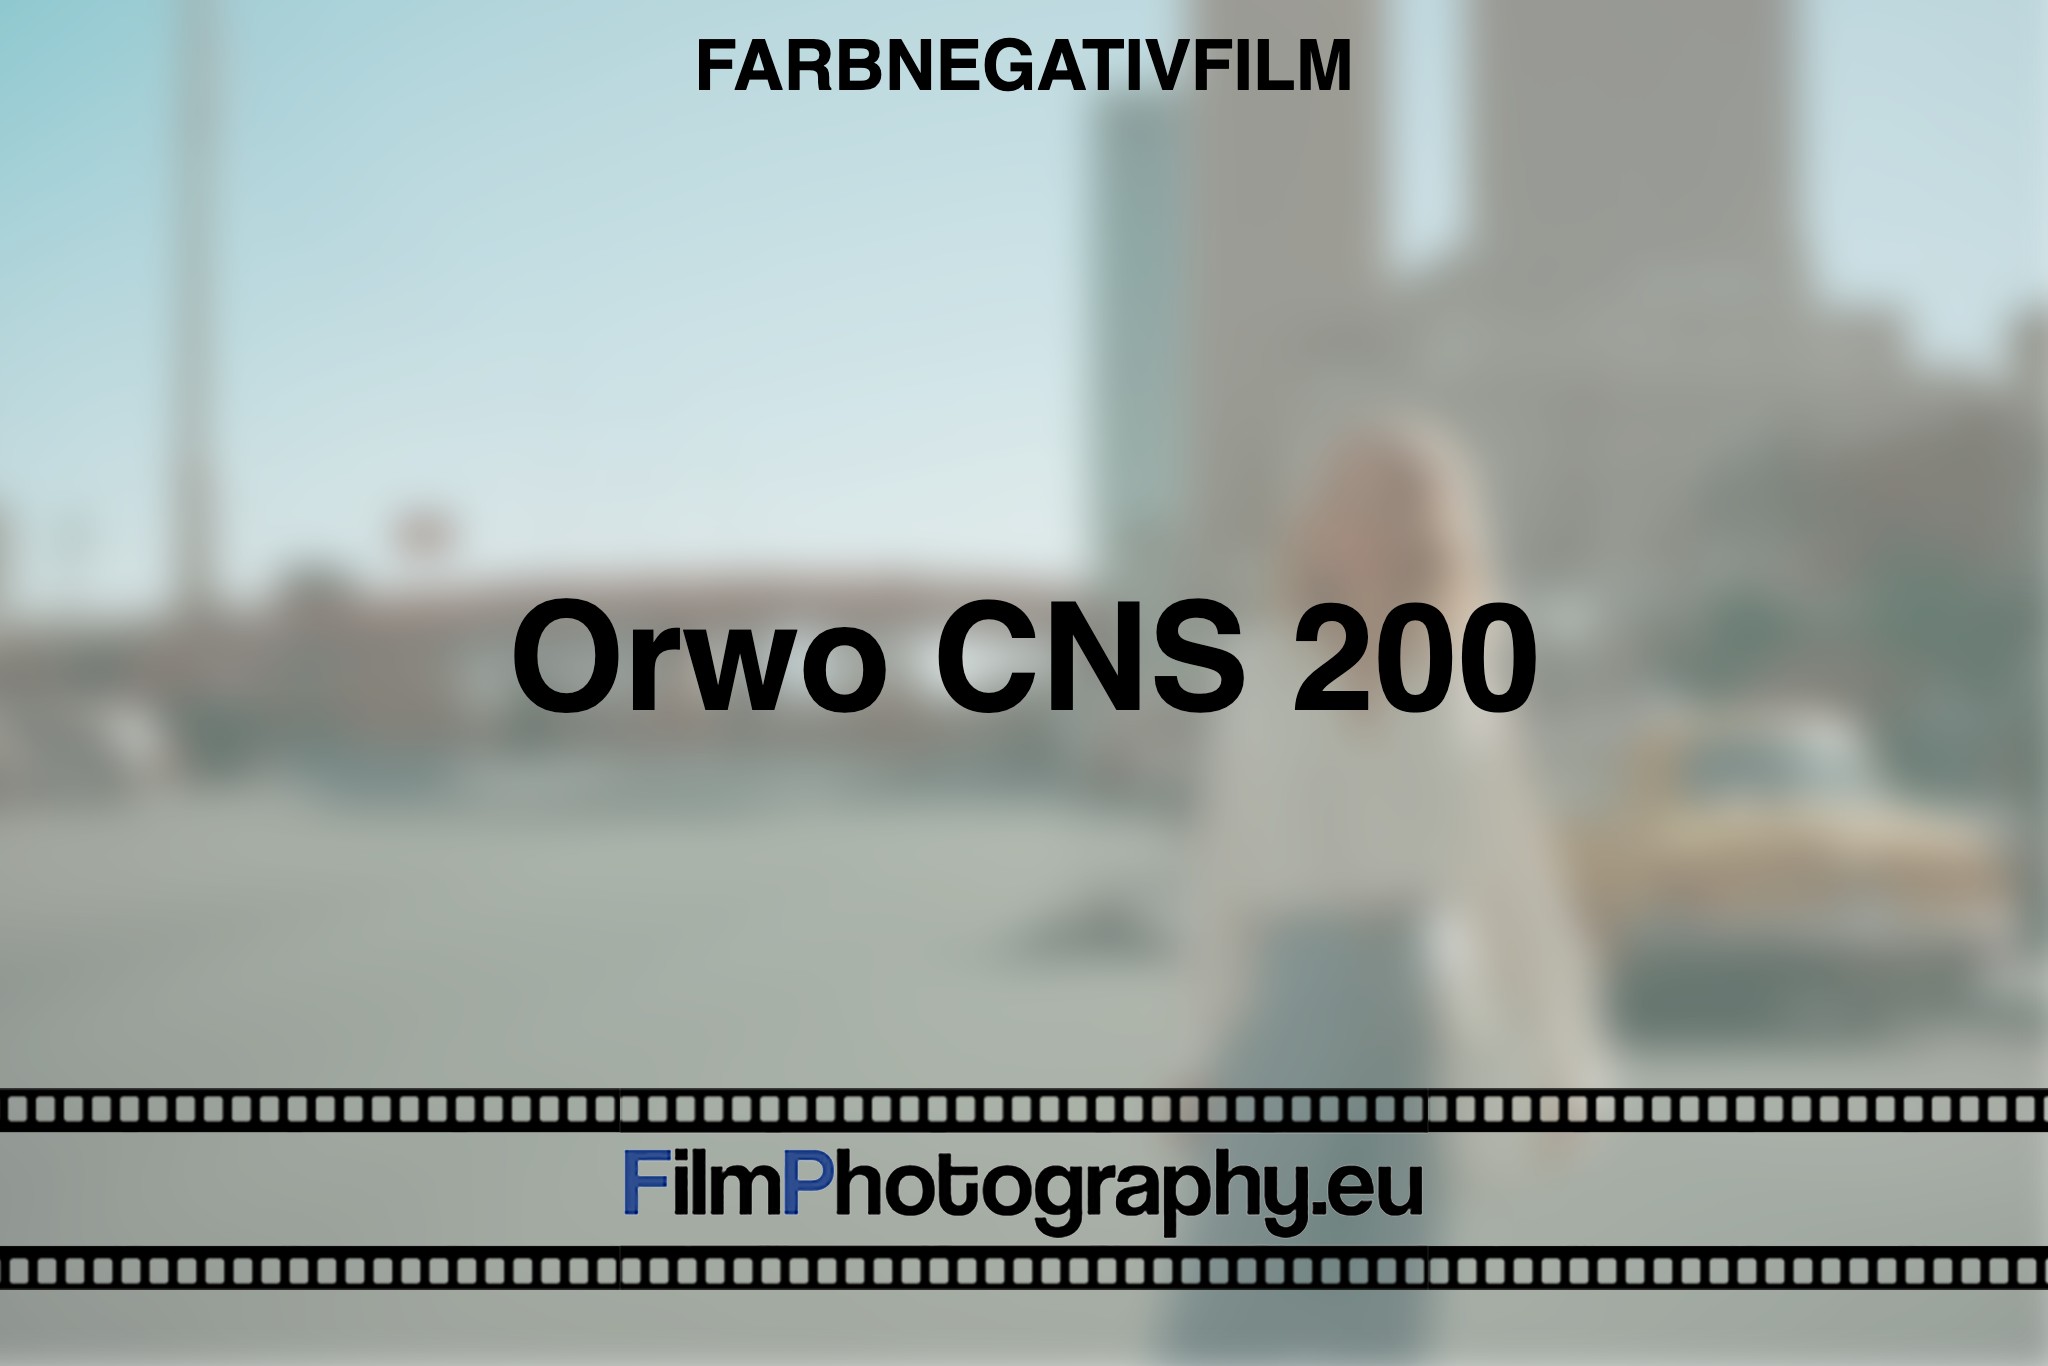 orwo-cns-200-farbnegativfilm-bnv